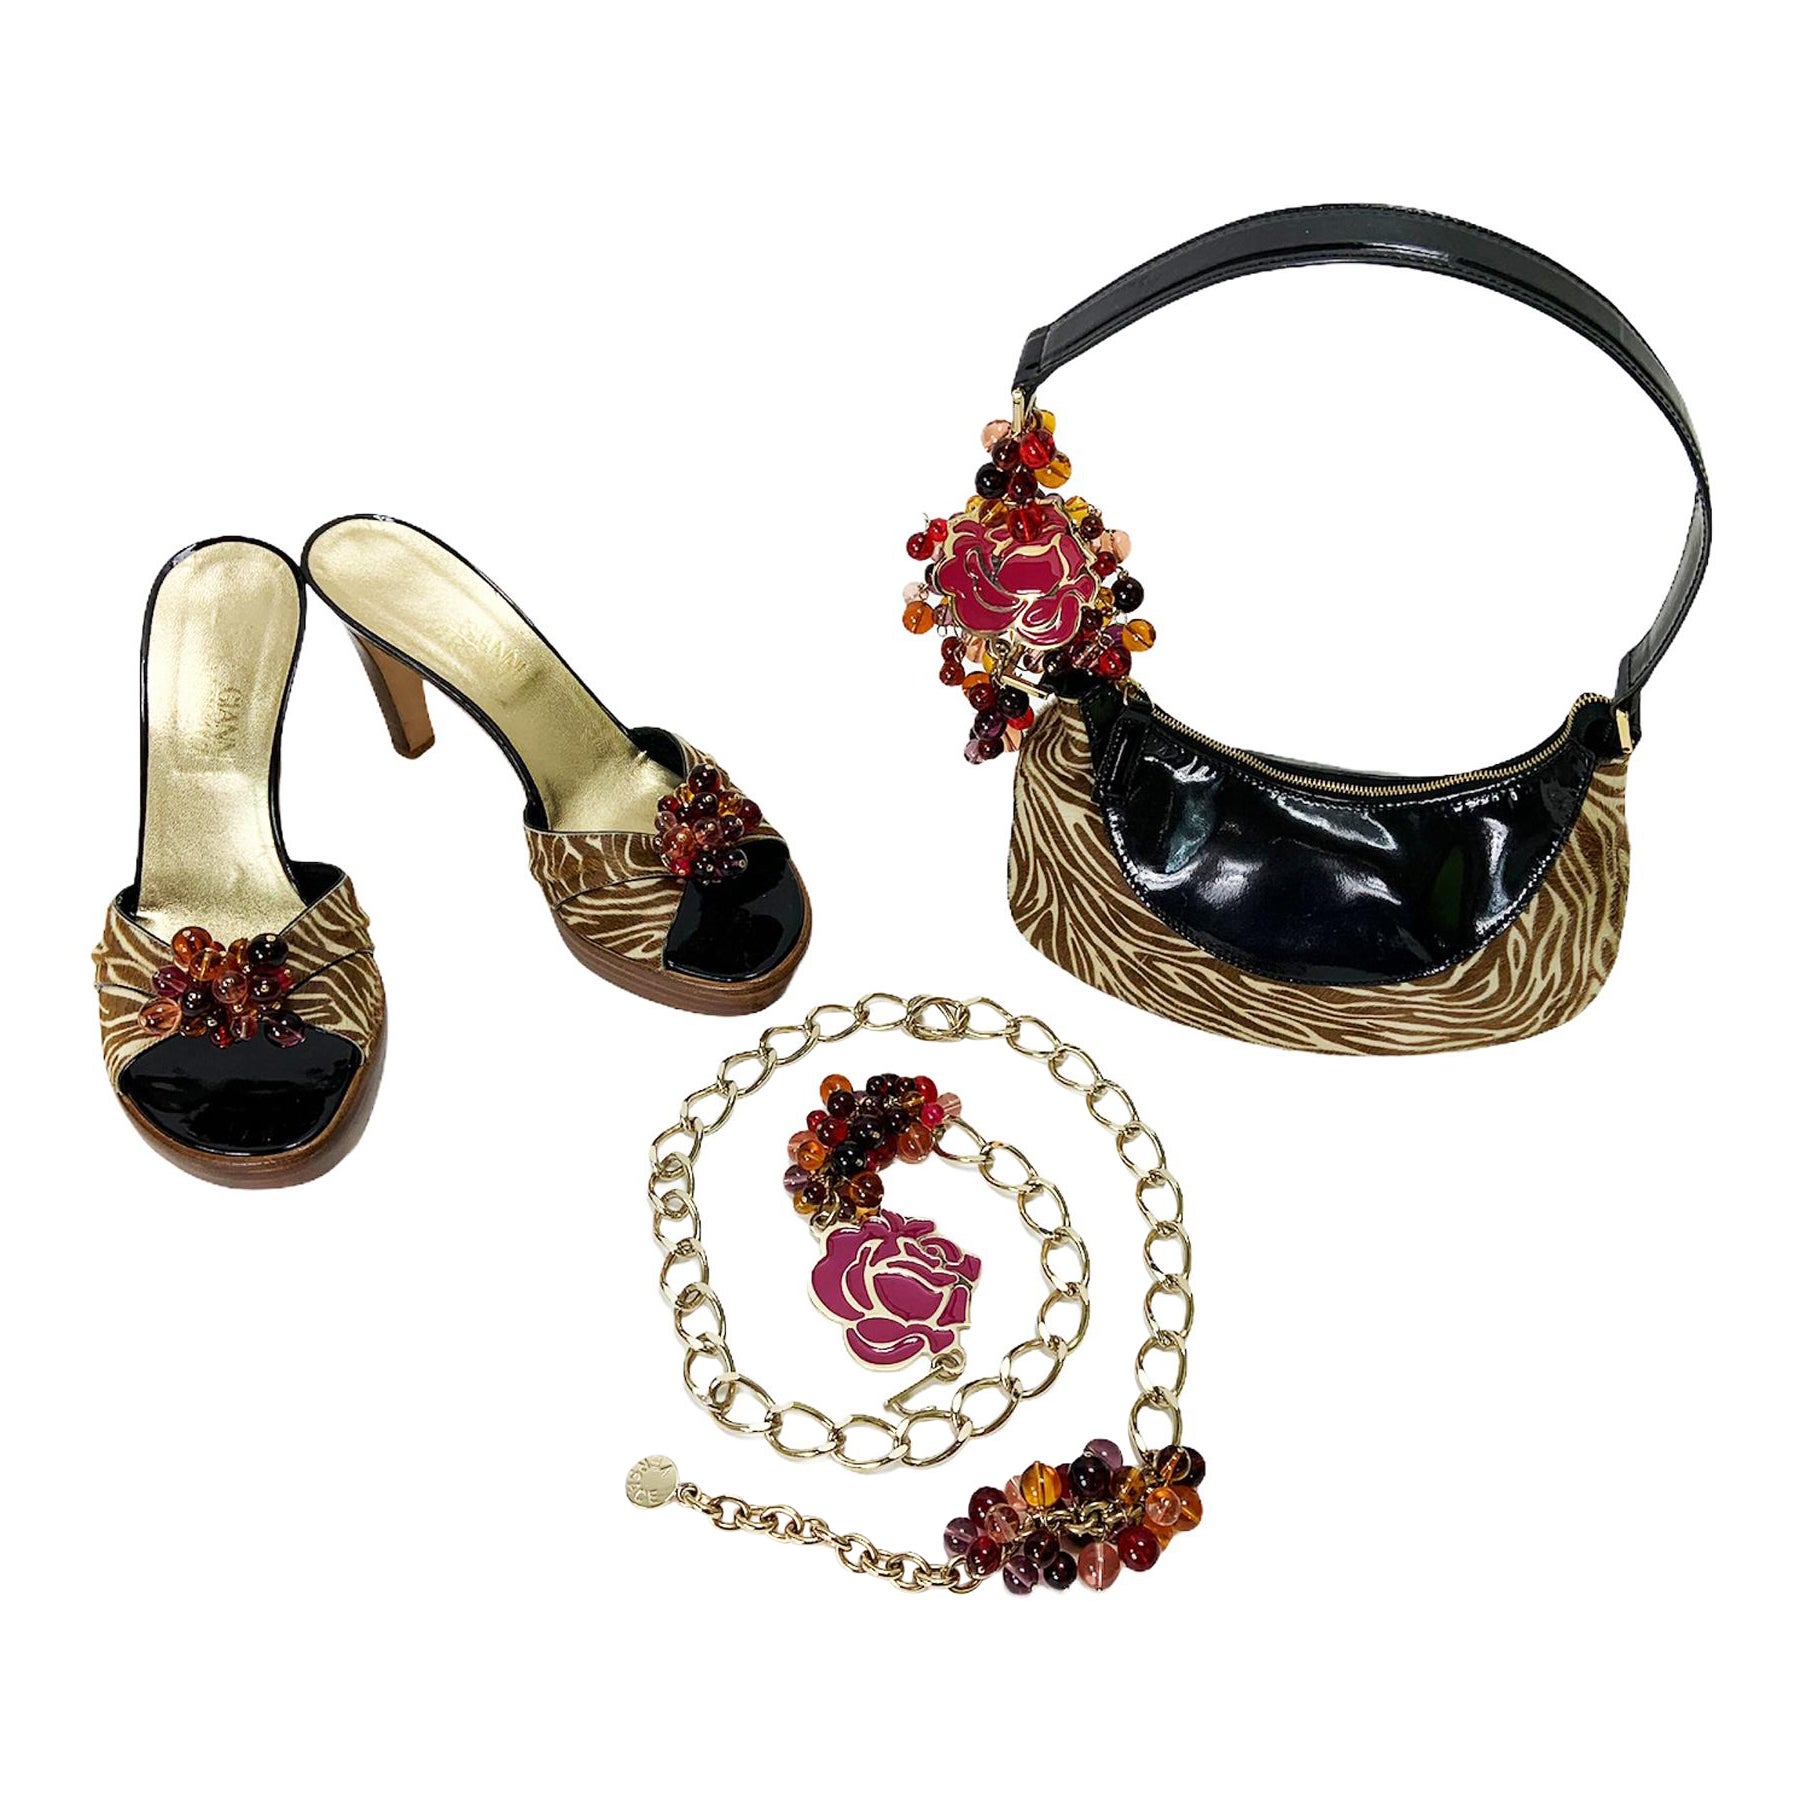 Vintage Gianni Versace S/S 1991 Matching Jeweled 3 pc Set - Bag + Belt + Shoes